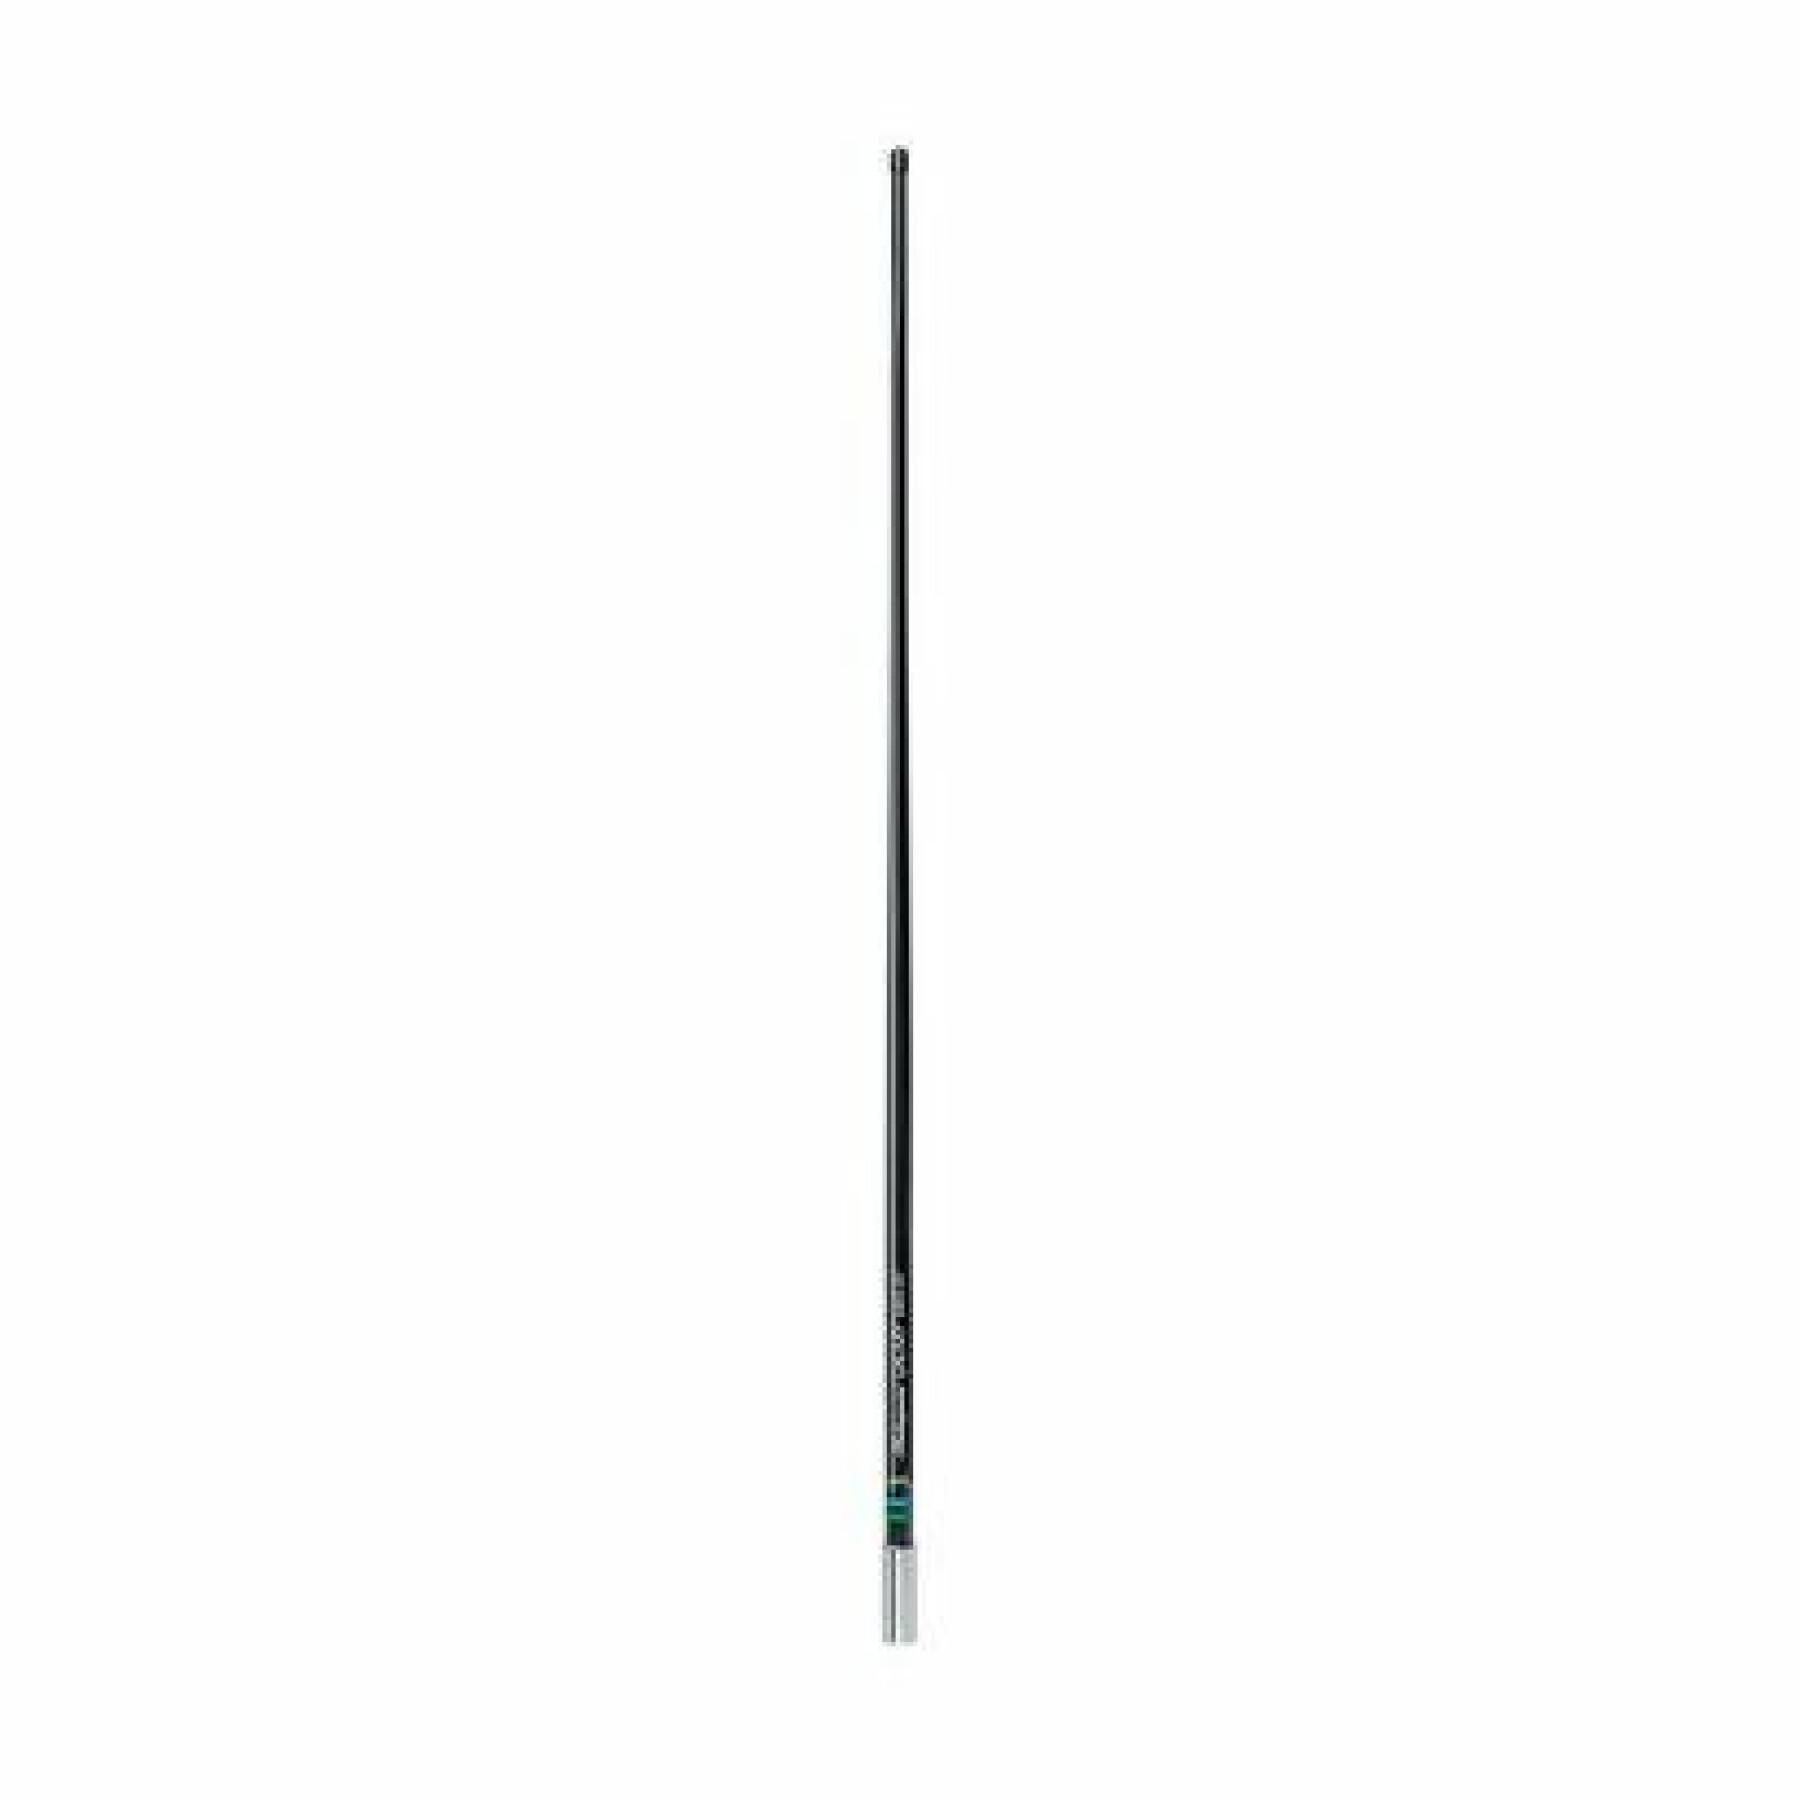 Antenn i hylsa av rostfritt stål Shakespeare VHF Galaxy 3dB – 1,2m - RG 8X+PL259